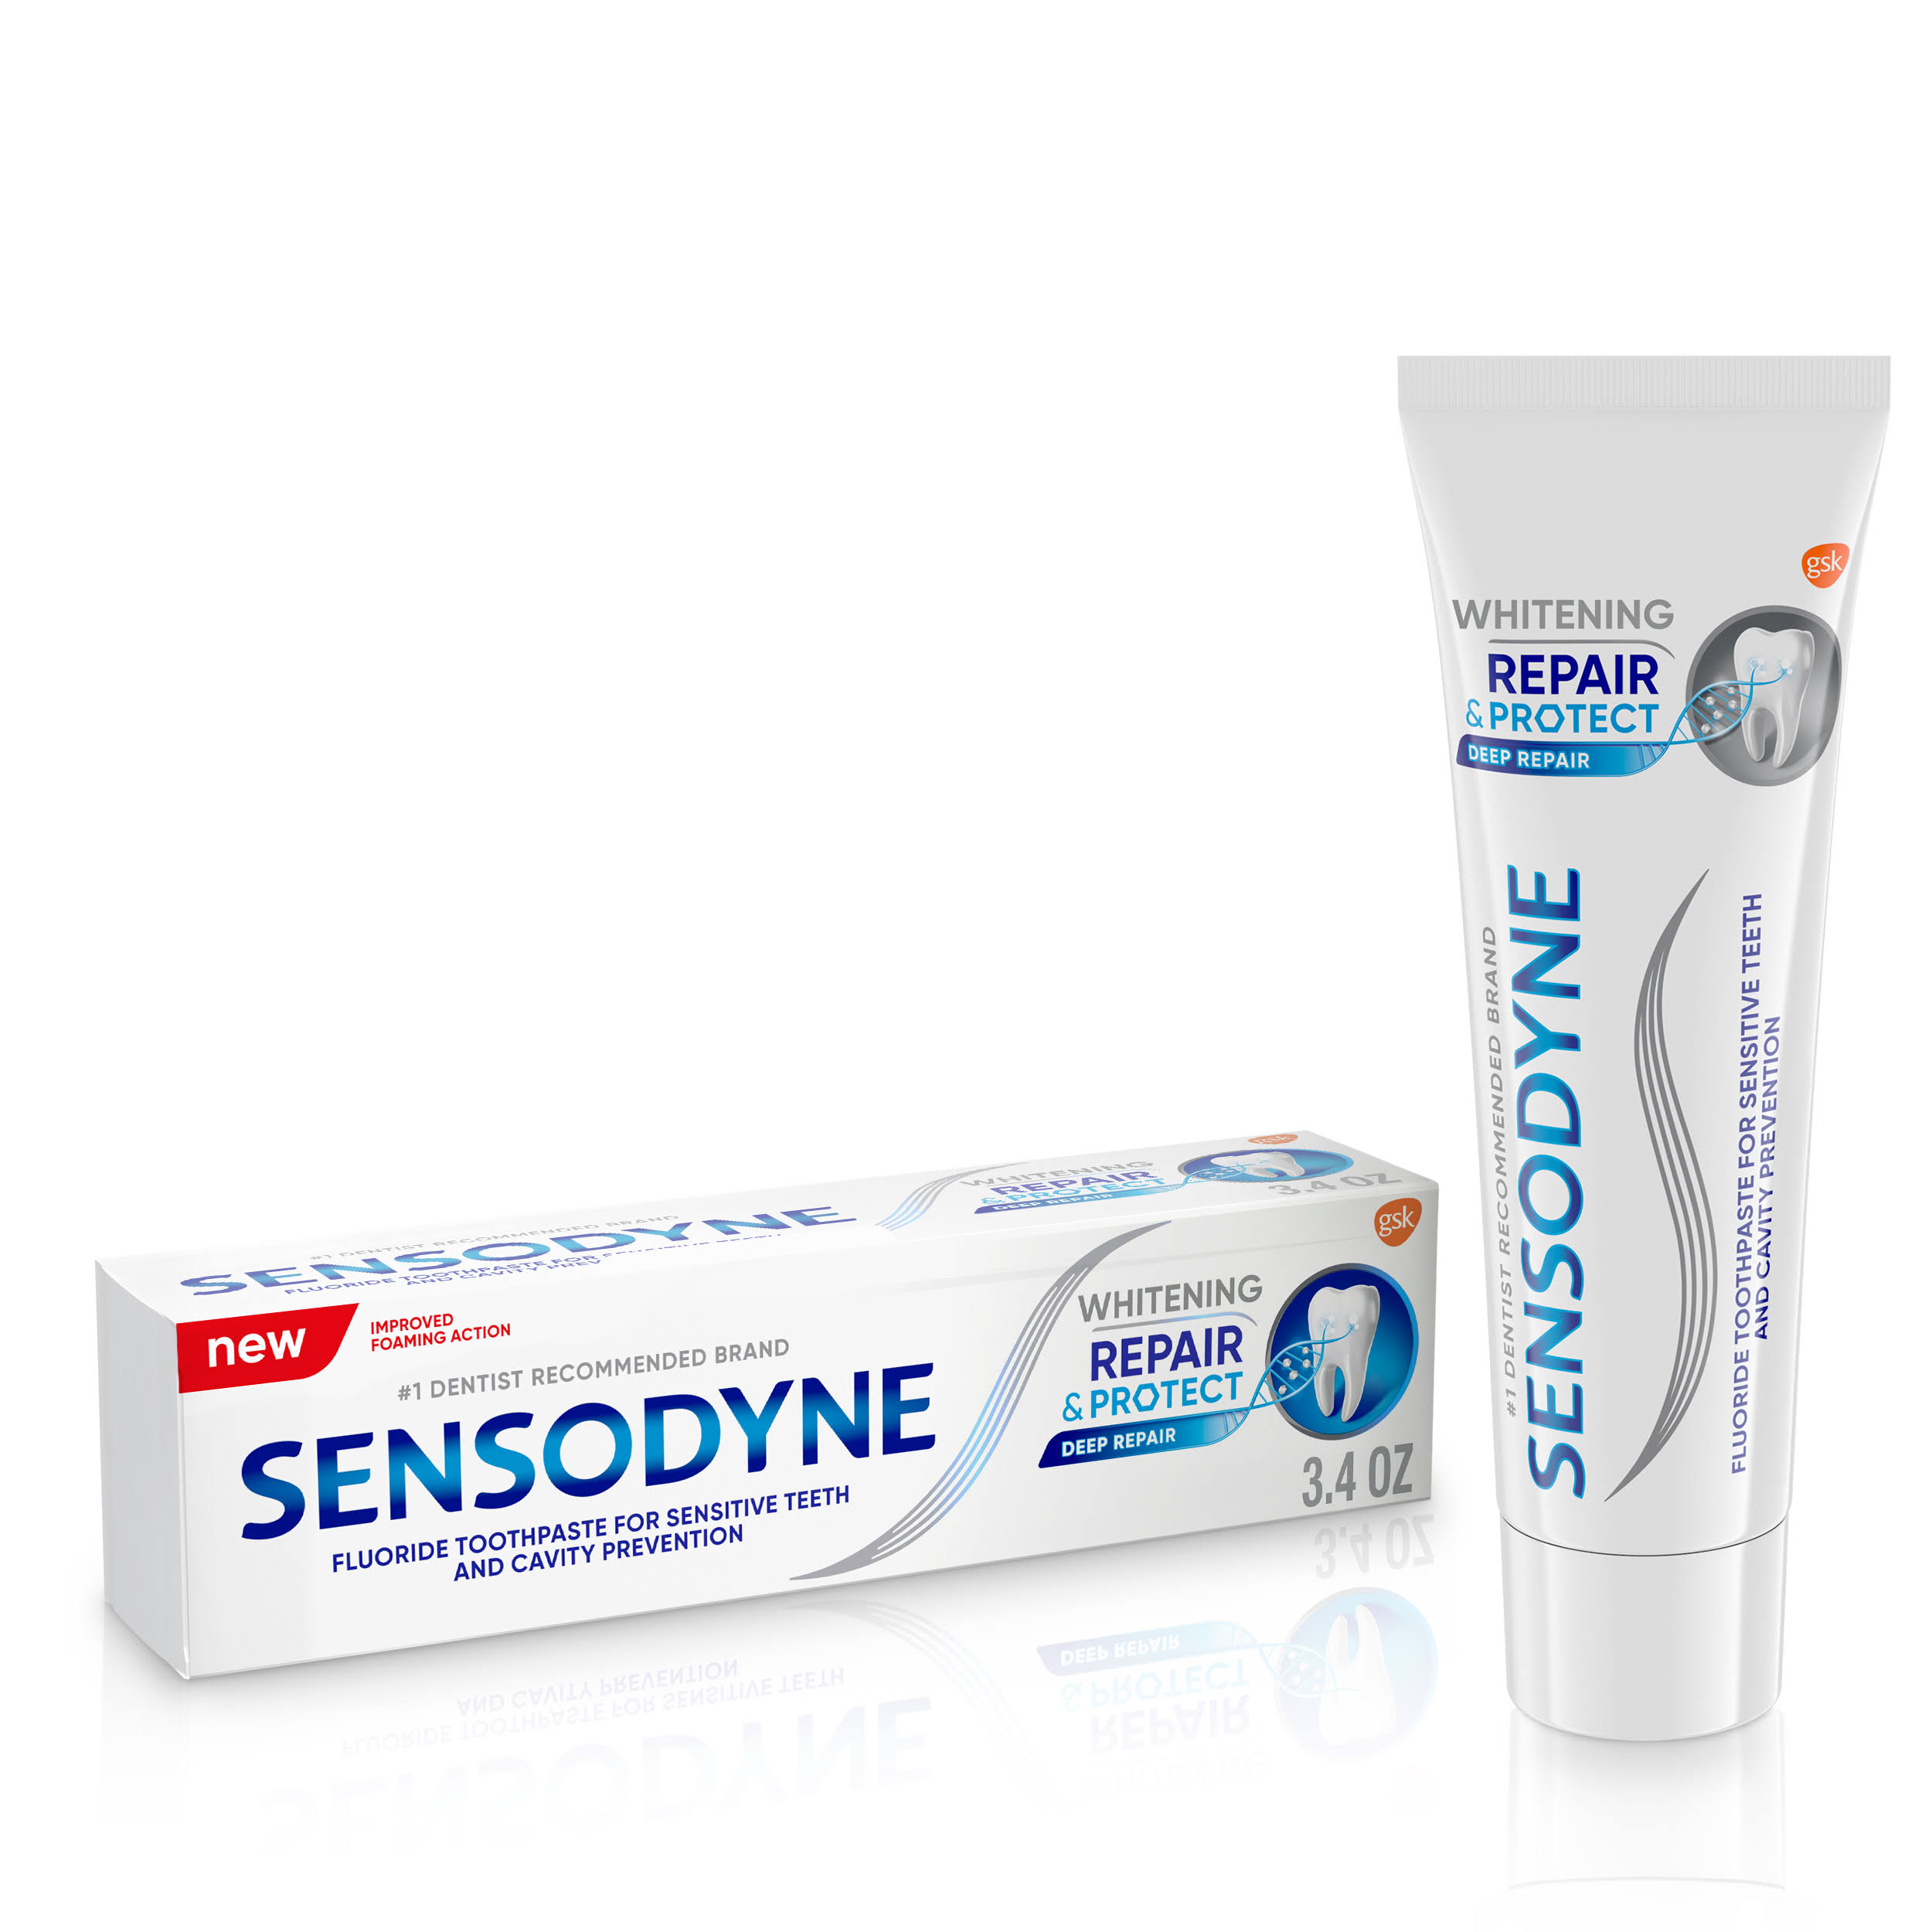 Sensodyne Whitening Repair and Protect Toothpaste - 3.4oz